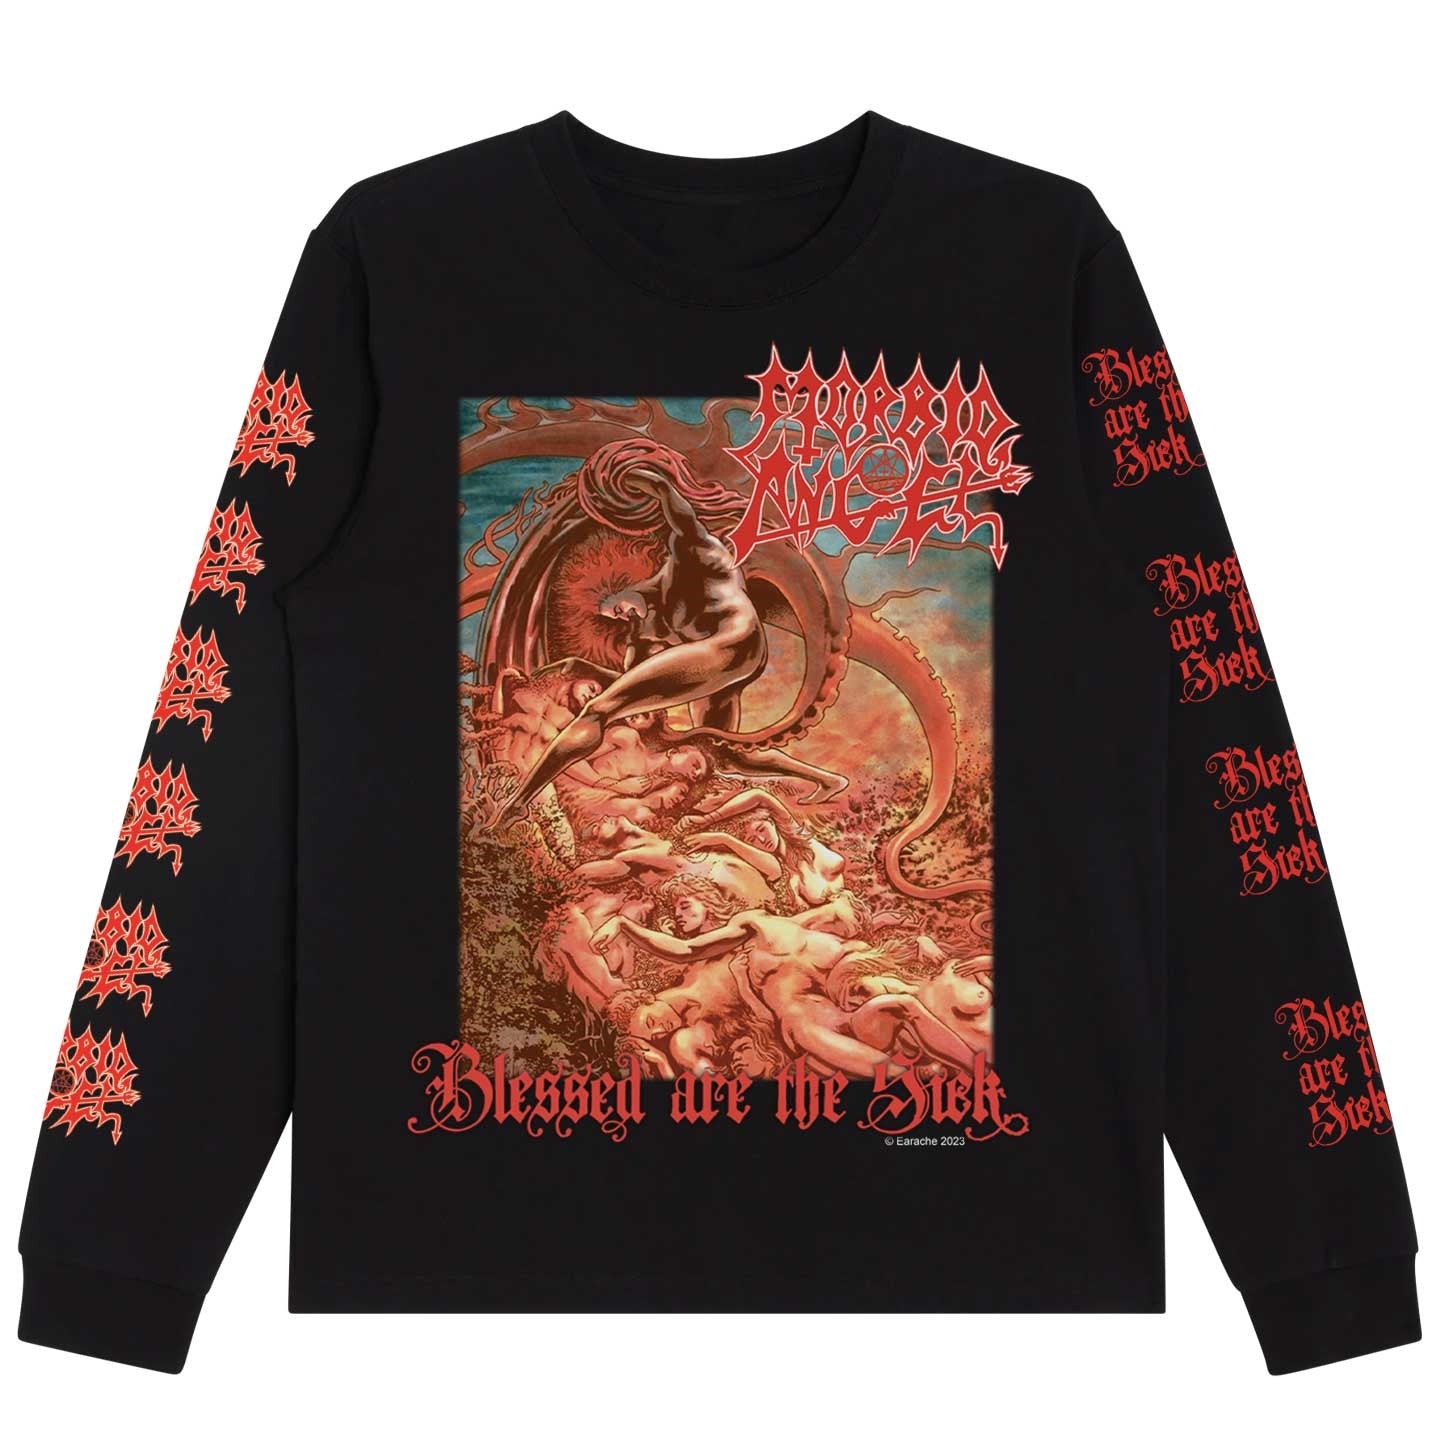 Morbid Angel "Blessed Are The Sick" Crew Neck Sweatshirt